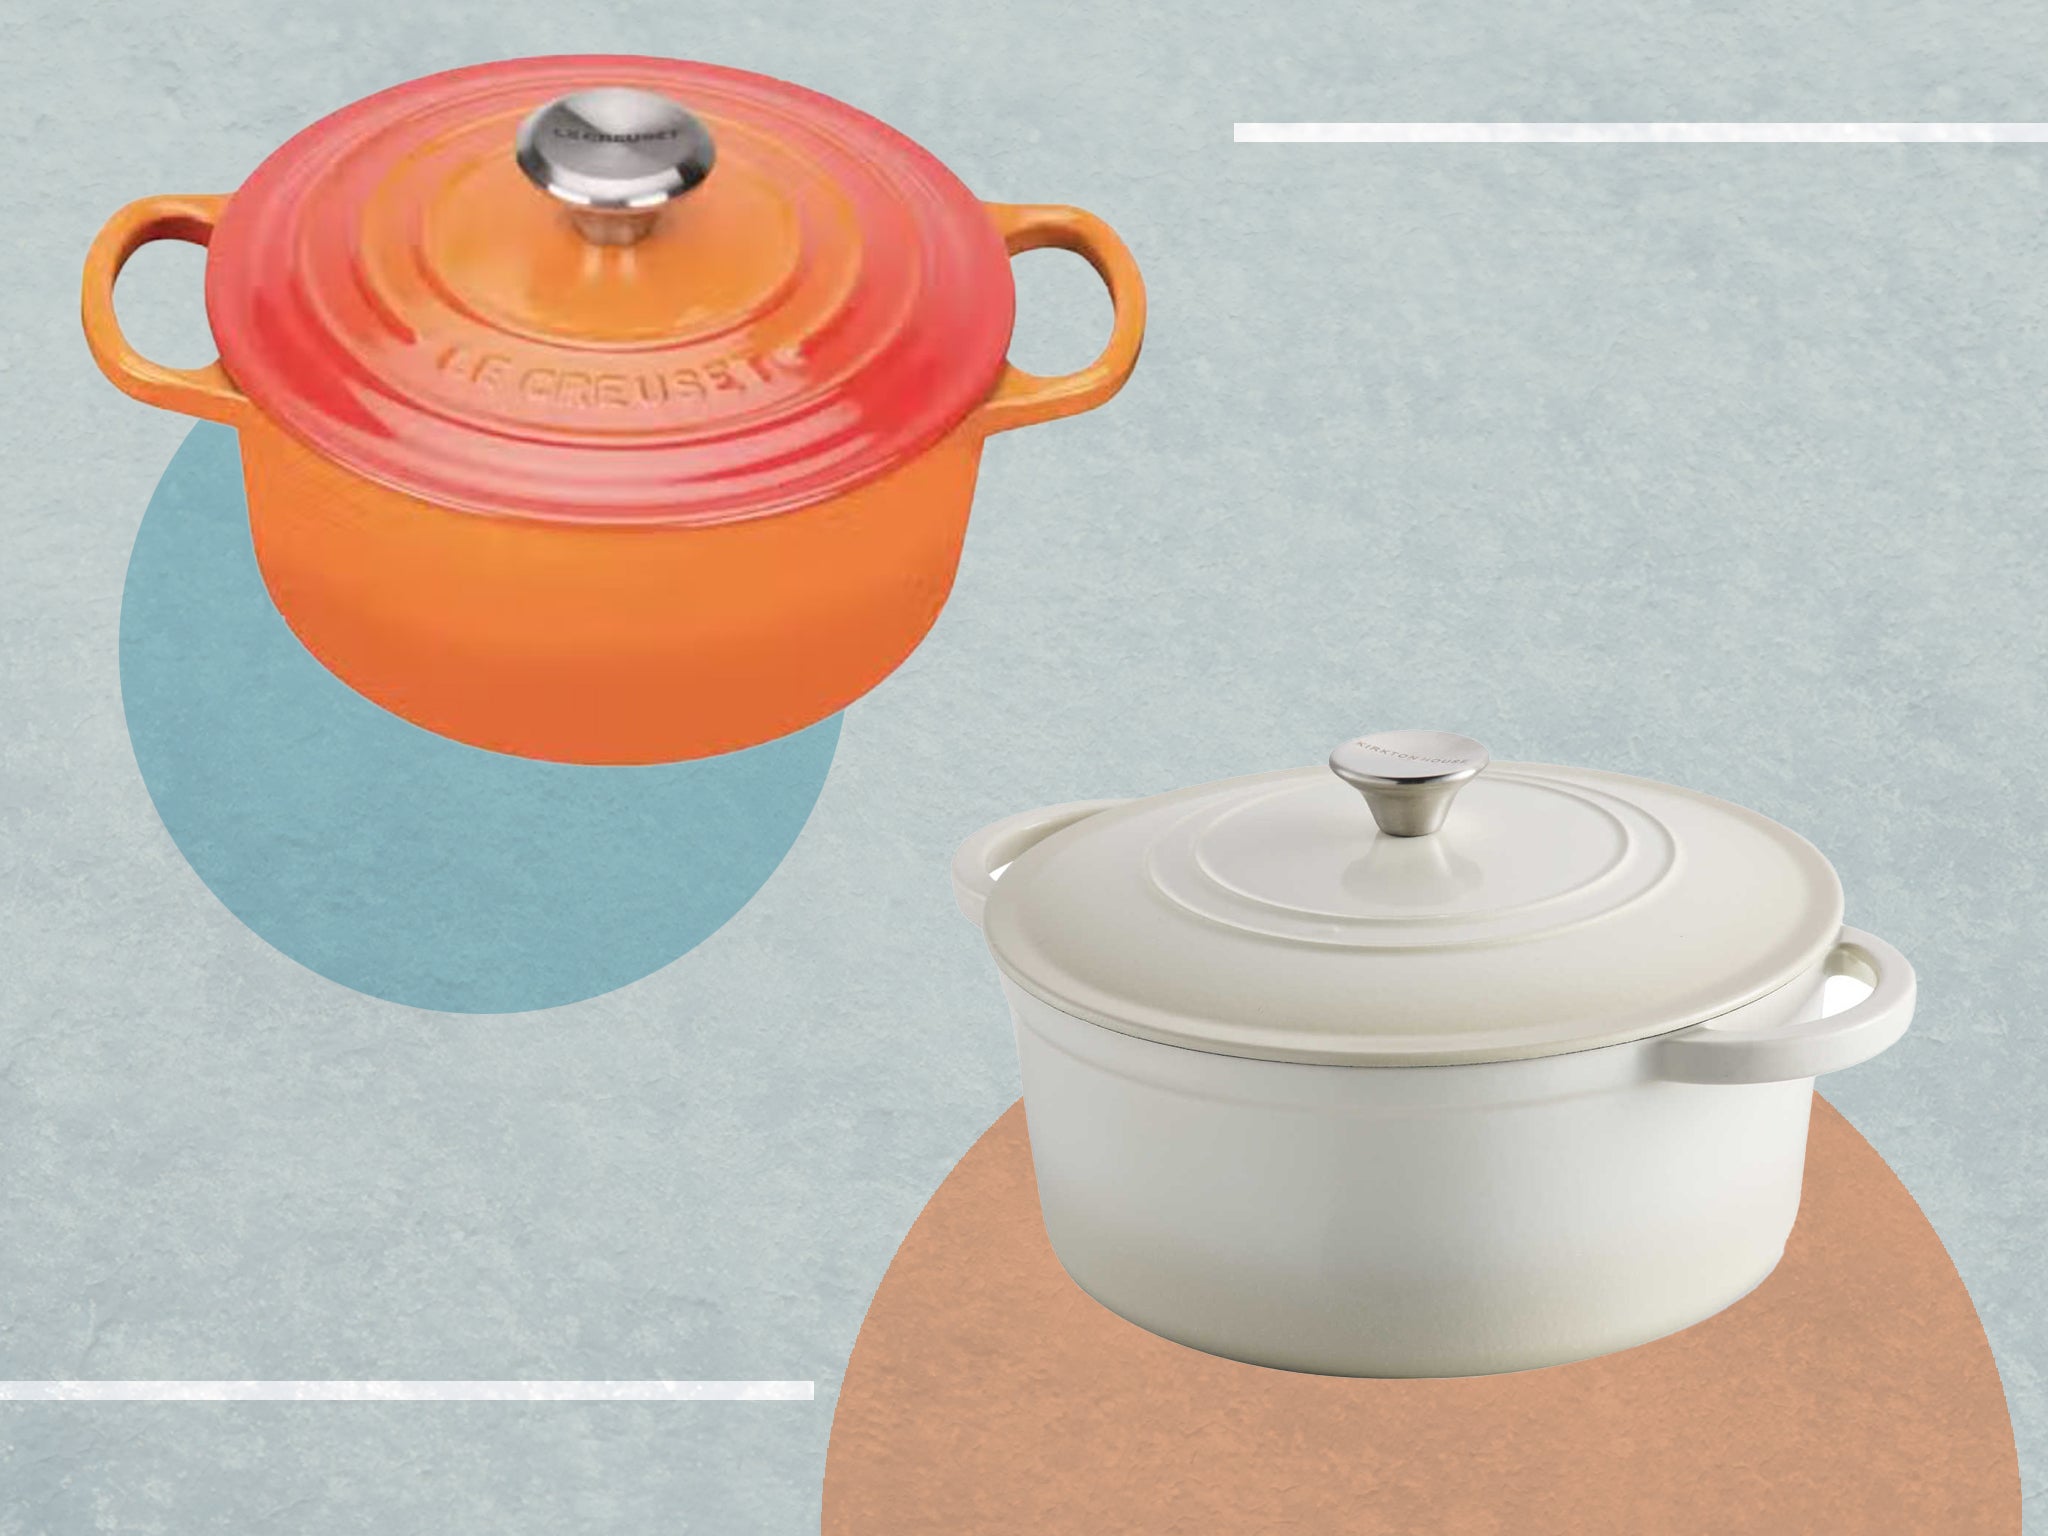 Aldi's cast iron cookware is back: Is it better than Le Creuset's casserole  dish?